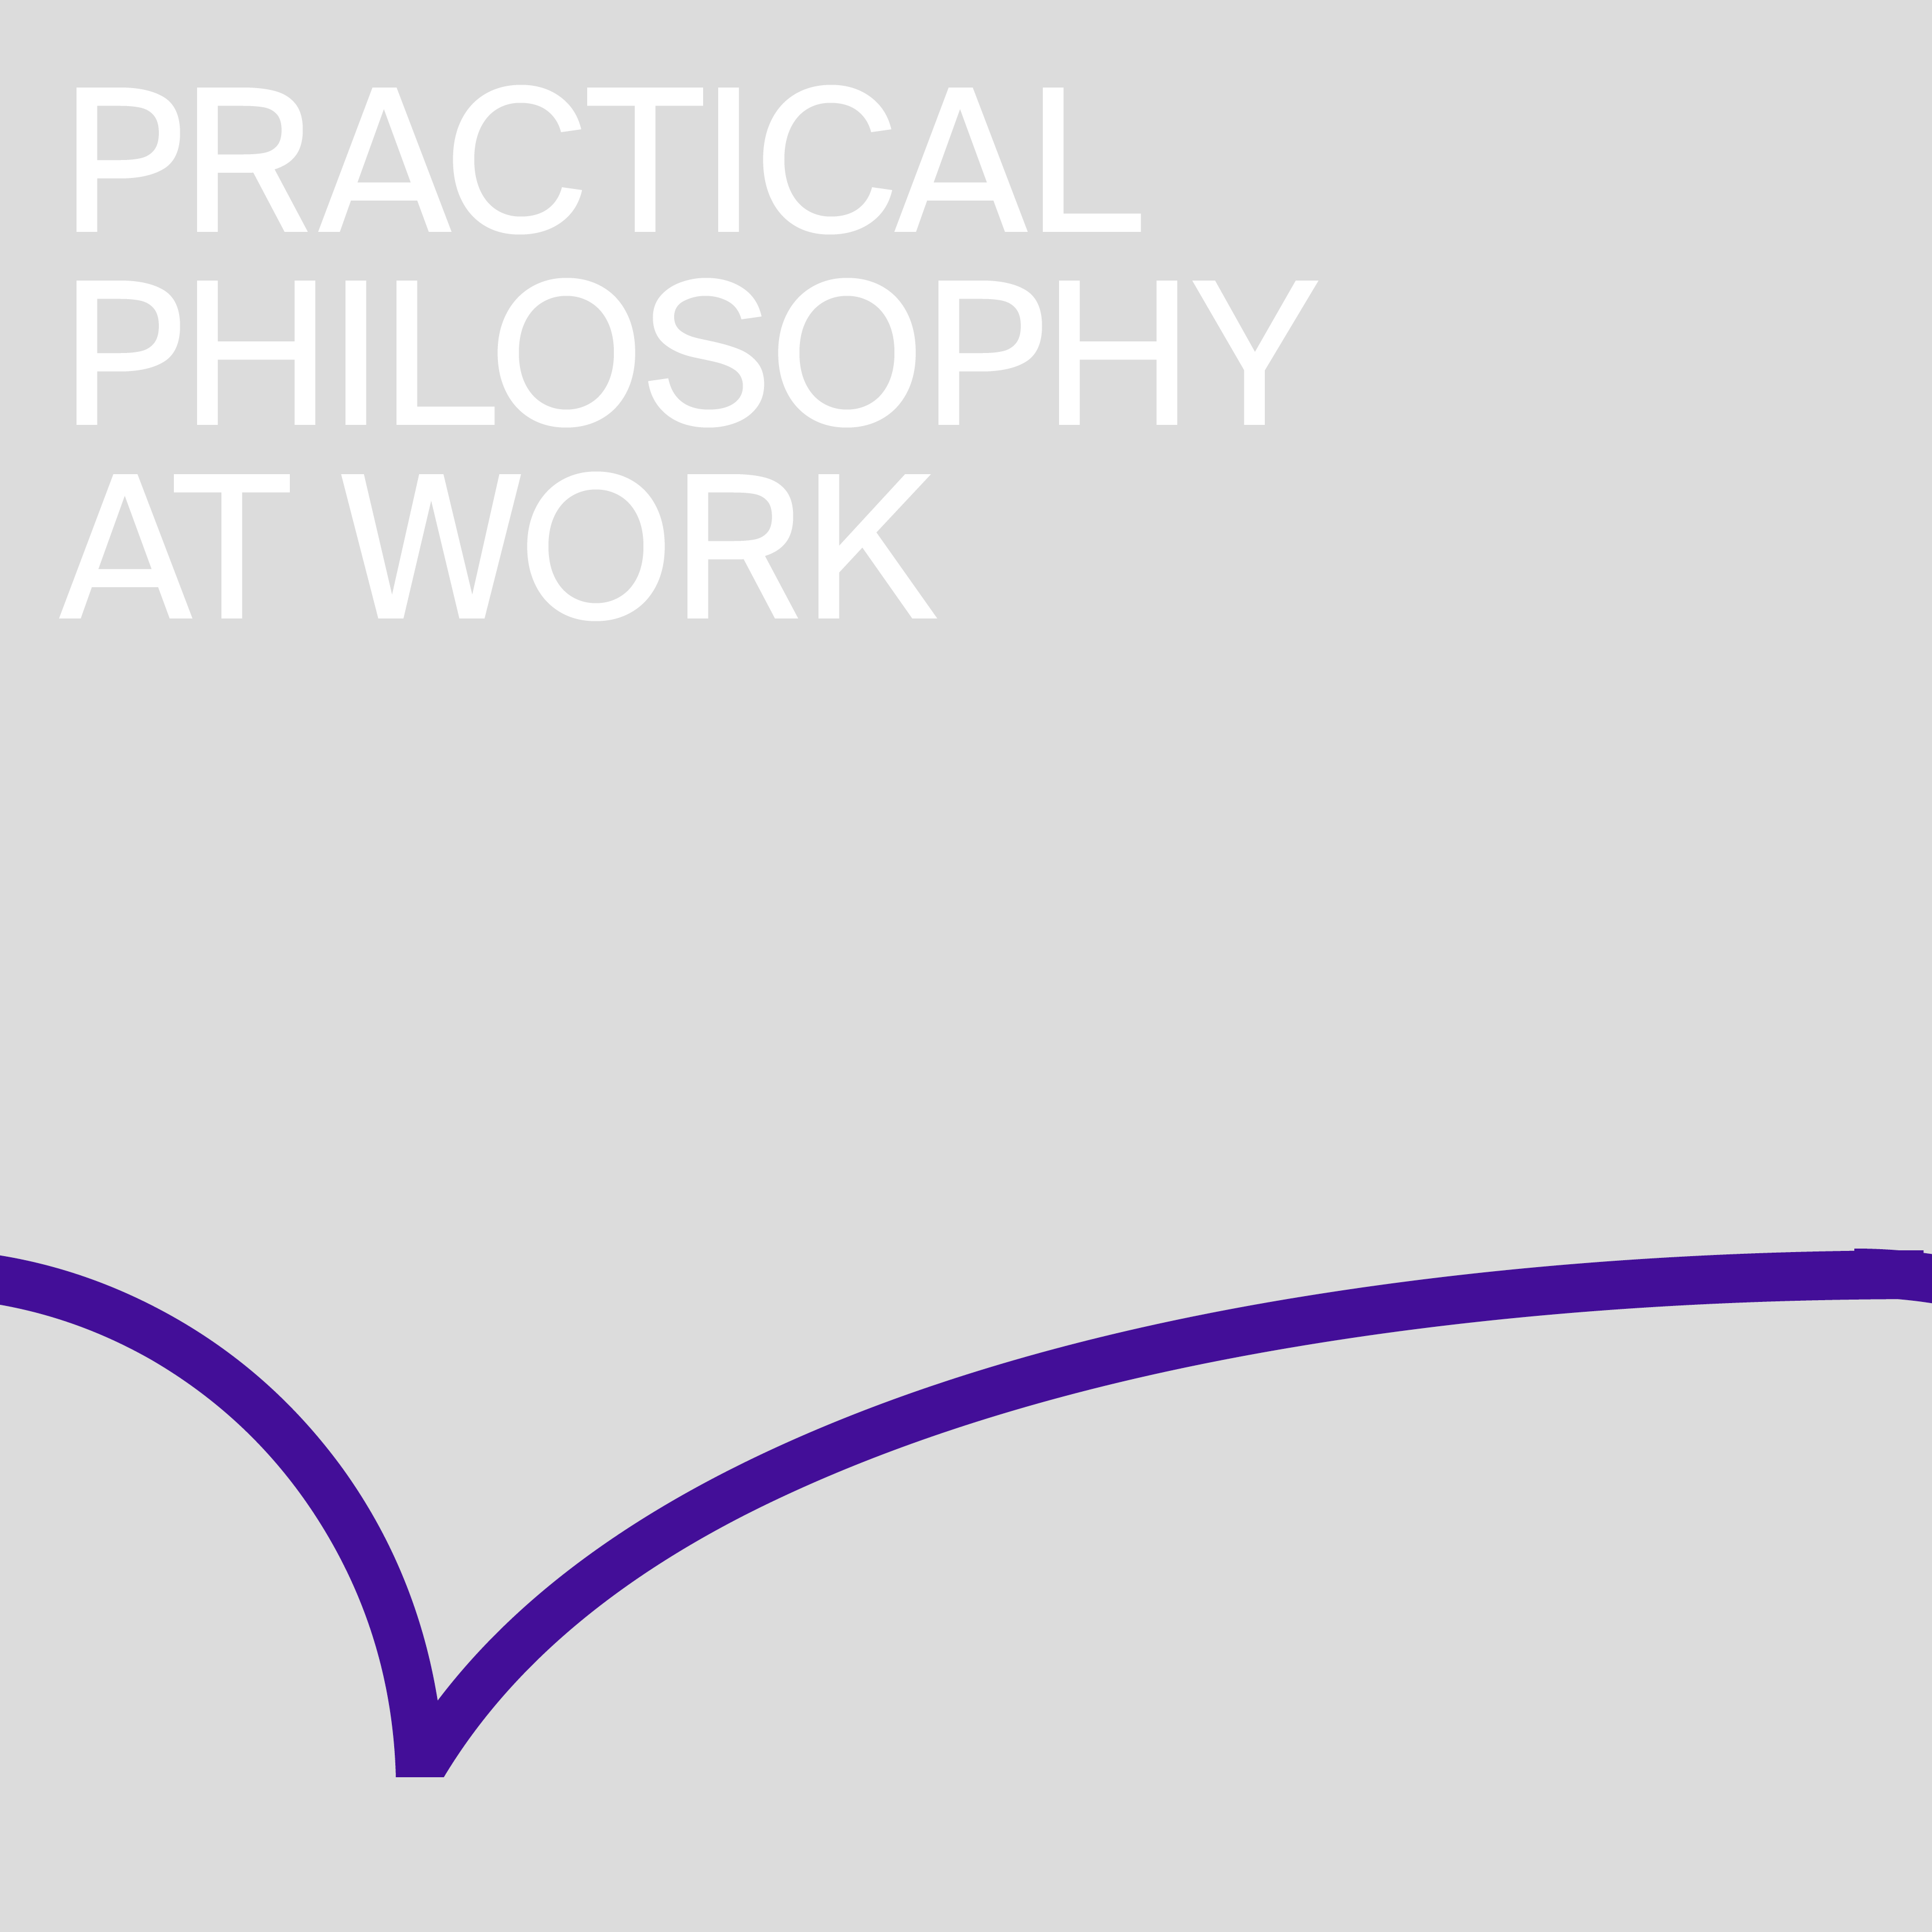 Practical philosophy at work banner